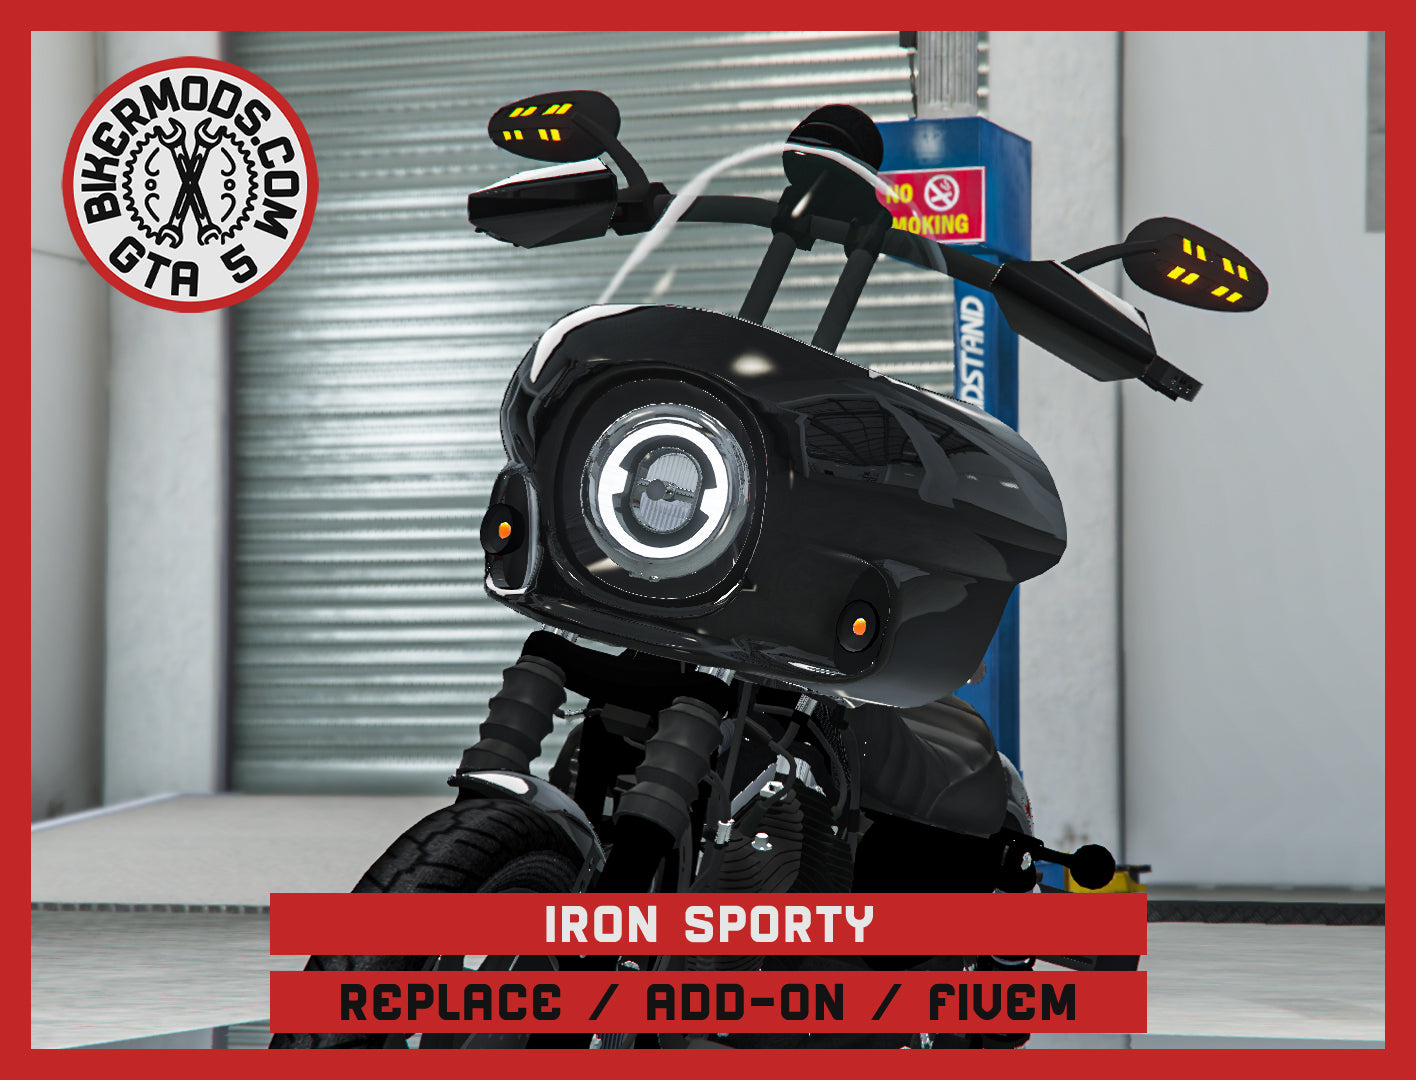 Iron Sporty (Replace / Add On / FiveM) 182k Poly